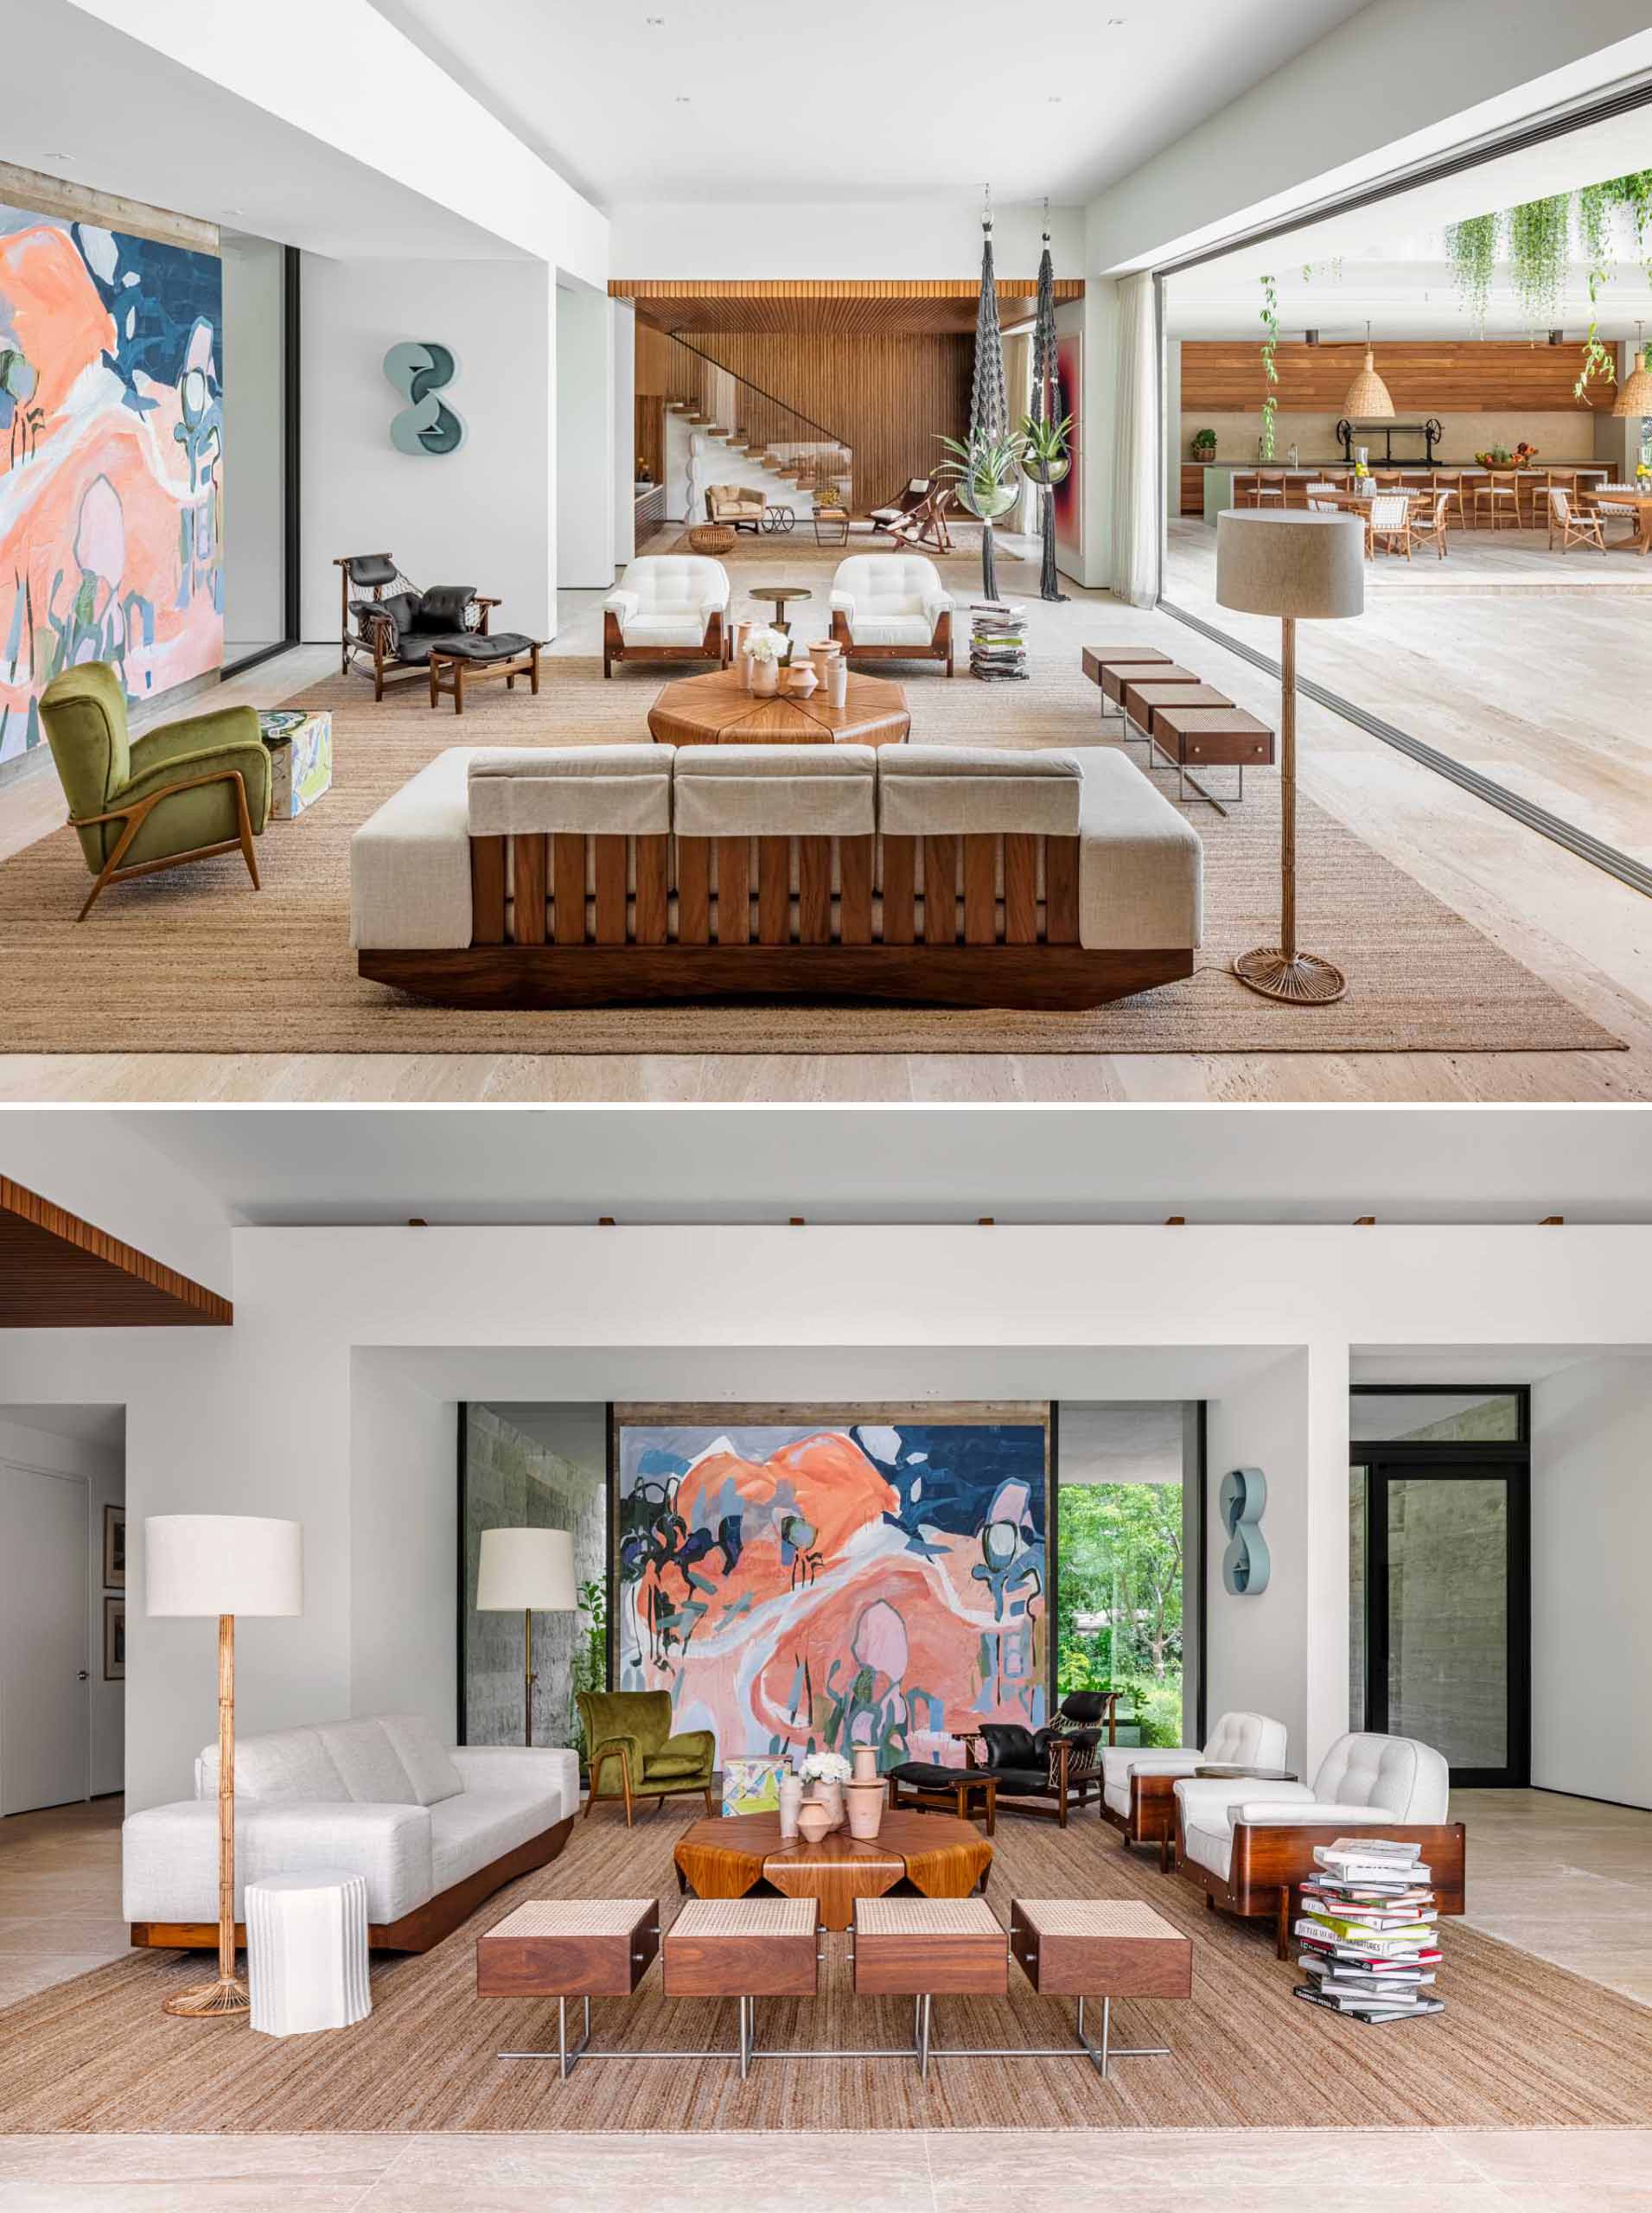 This modern living room includes a Janaina Tschäpe painting, Amir Nikravan sculpture, Jorge Zalszupin coffee table, and Jean Gillon armchairs.